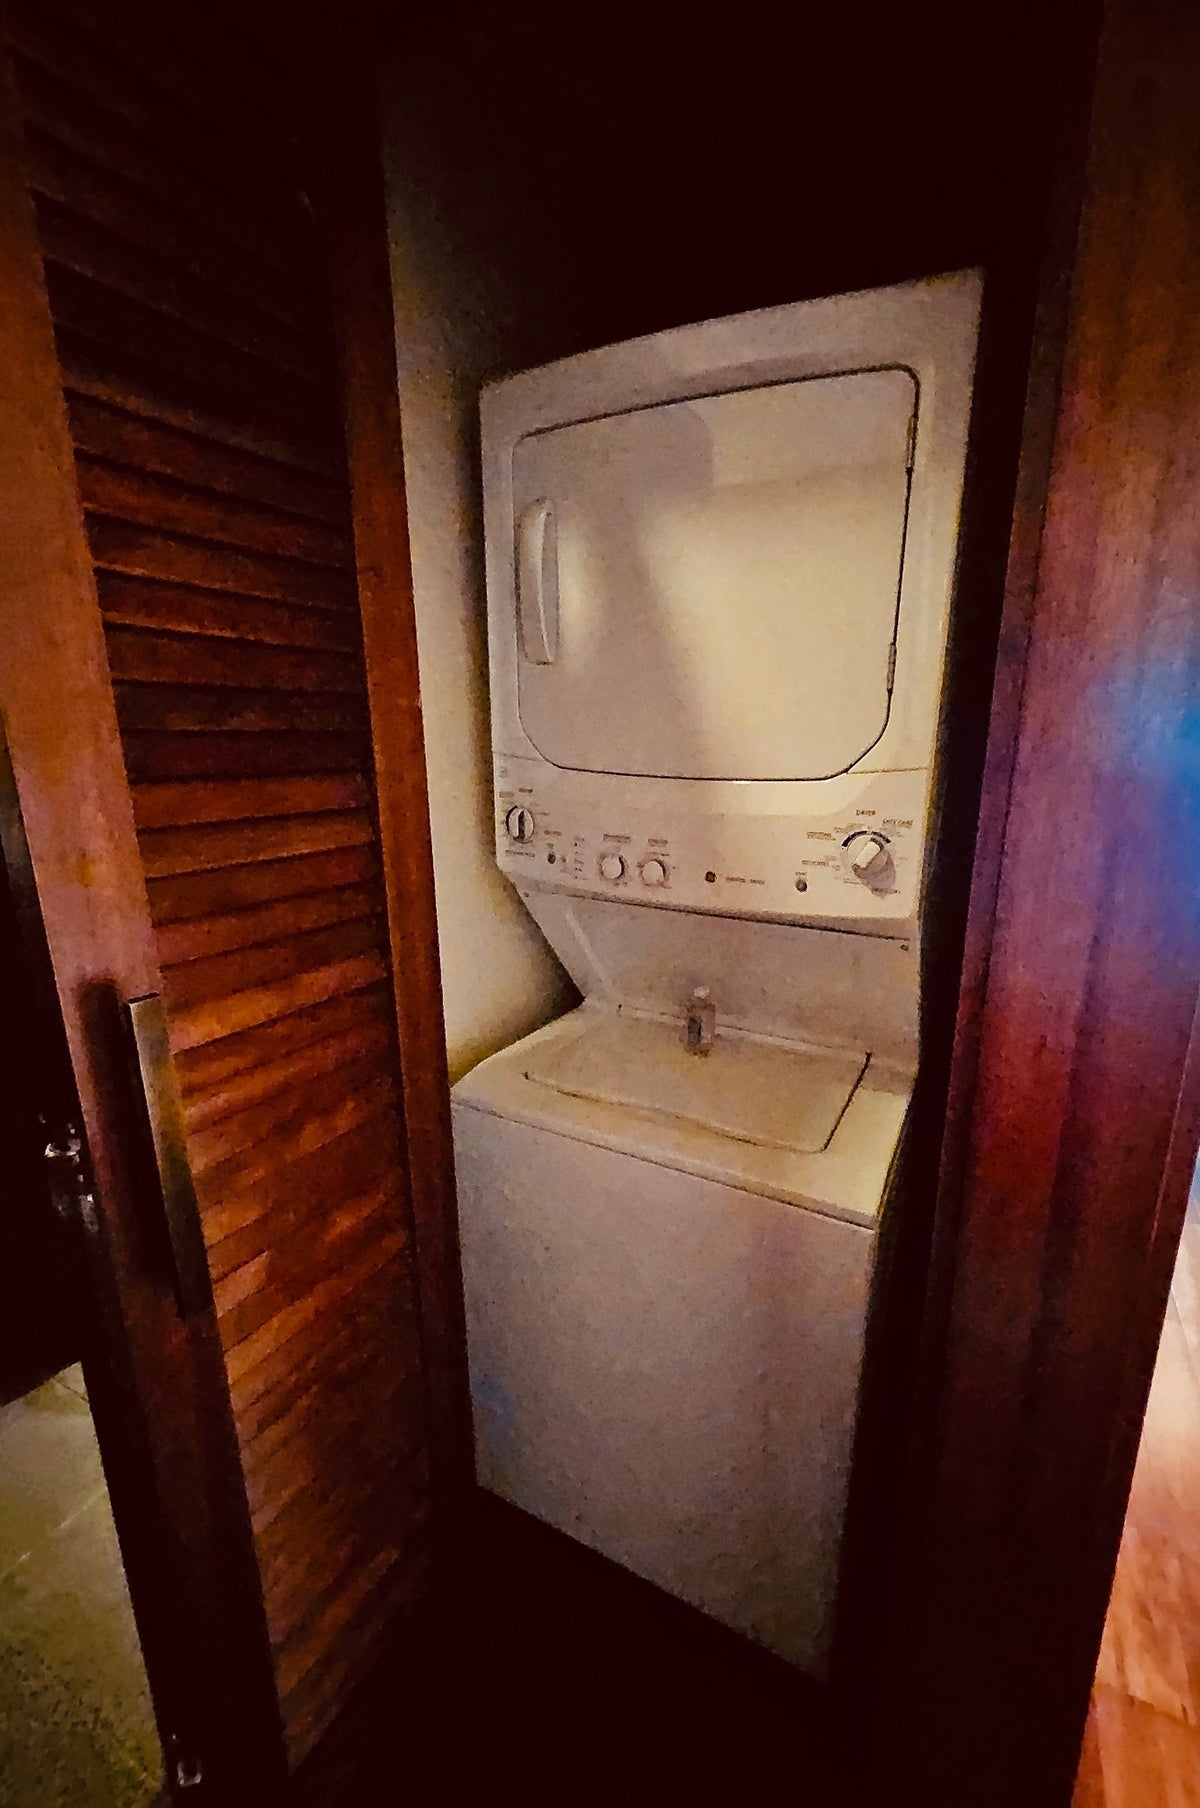 Disney Polynesian washer dryer